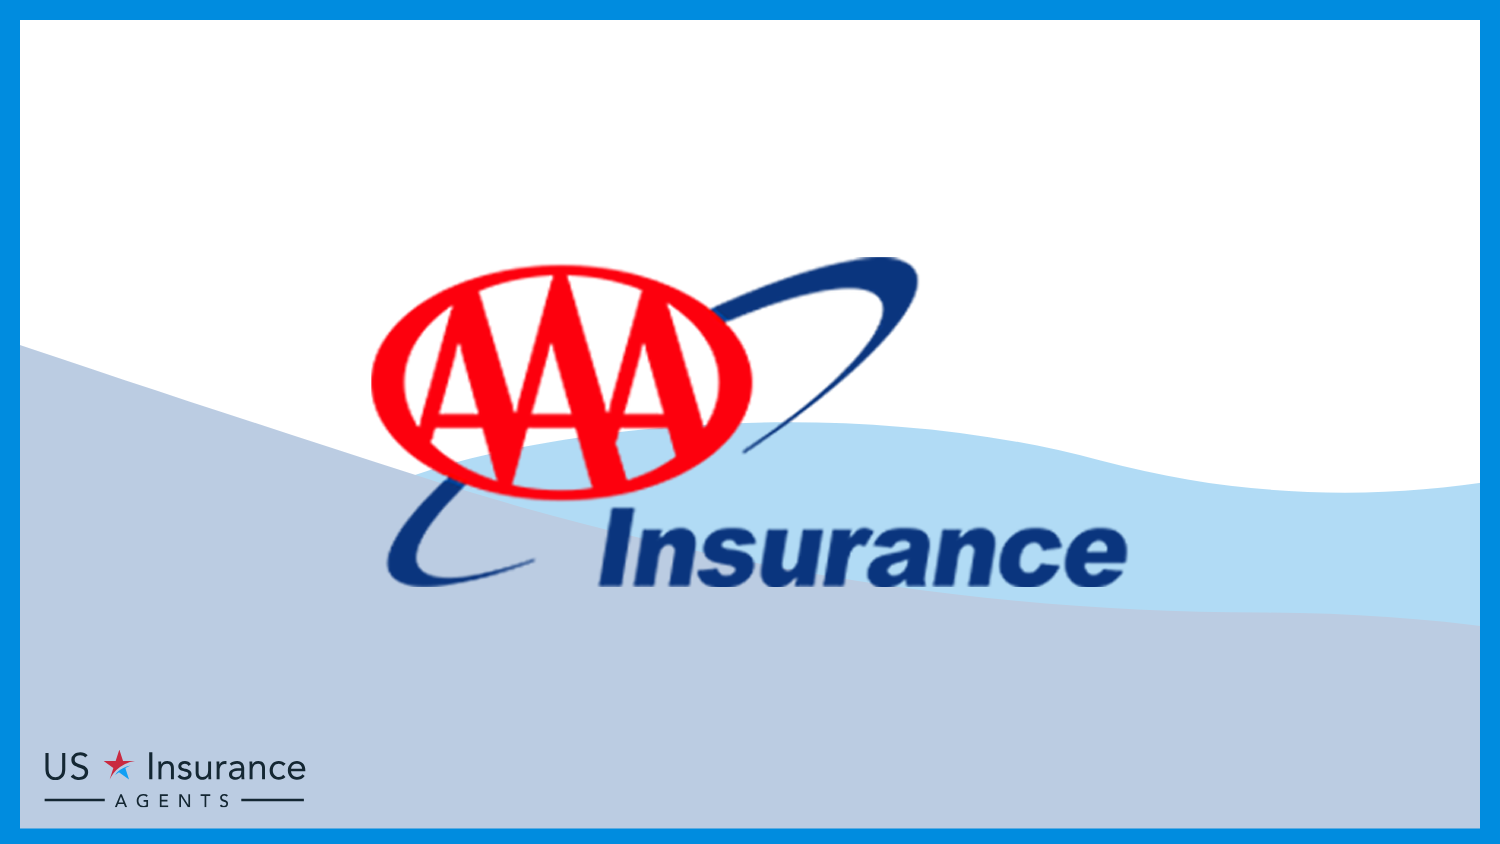 Best Whole Life Insurance : AAA Insurance 